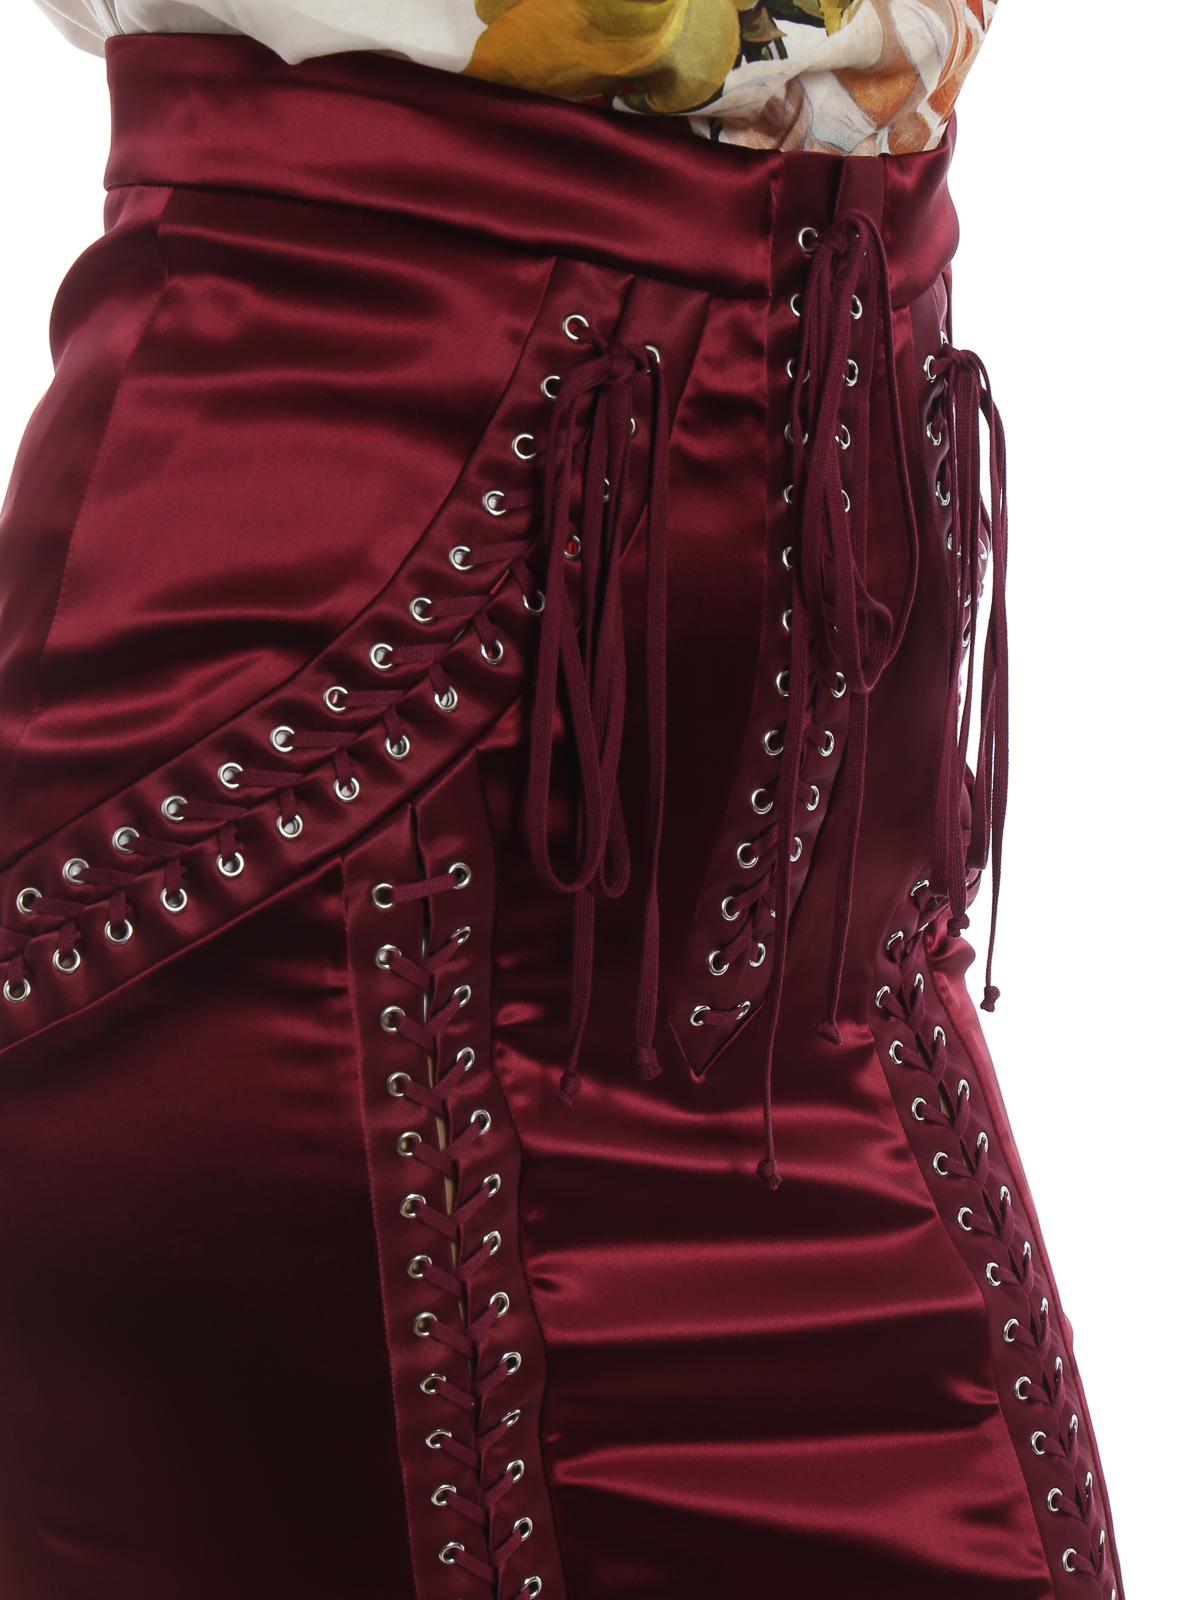 corset skirt online